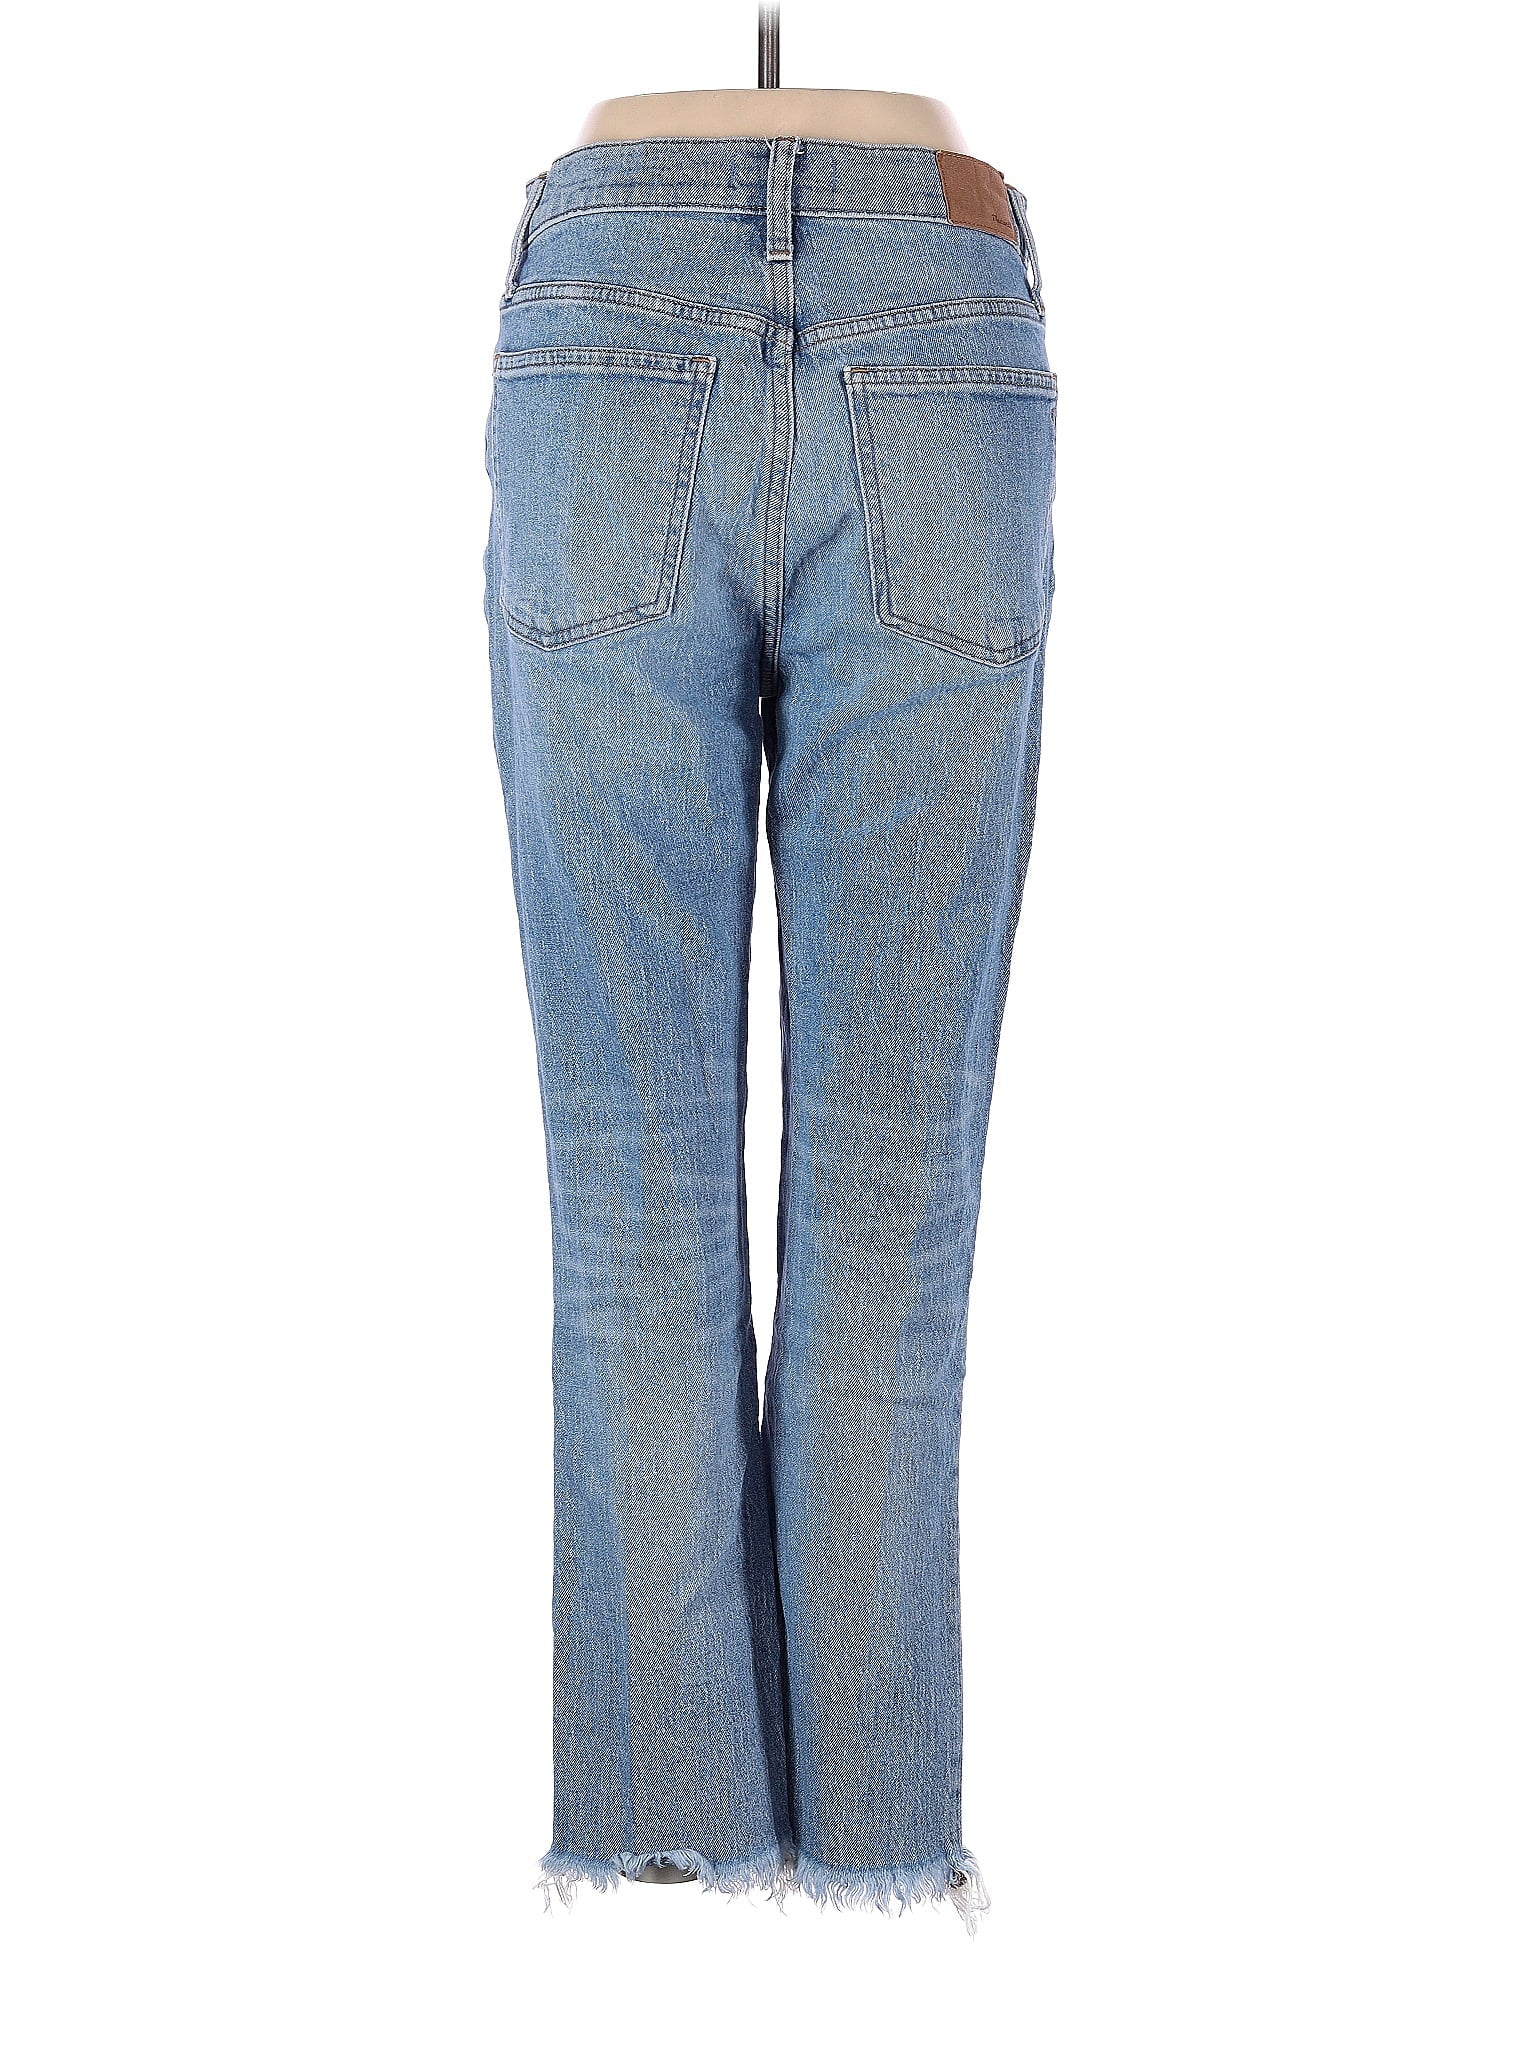 Mid-Rise Jeans waist size - 28